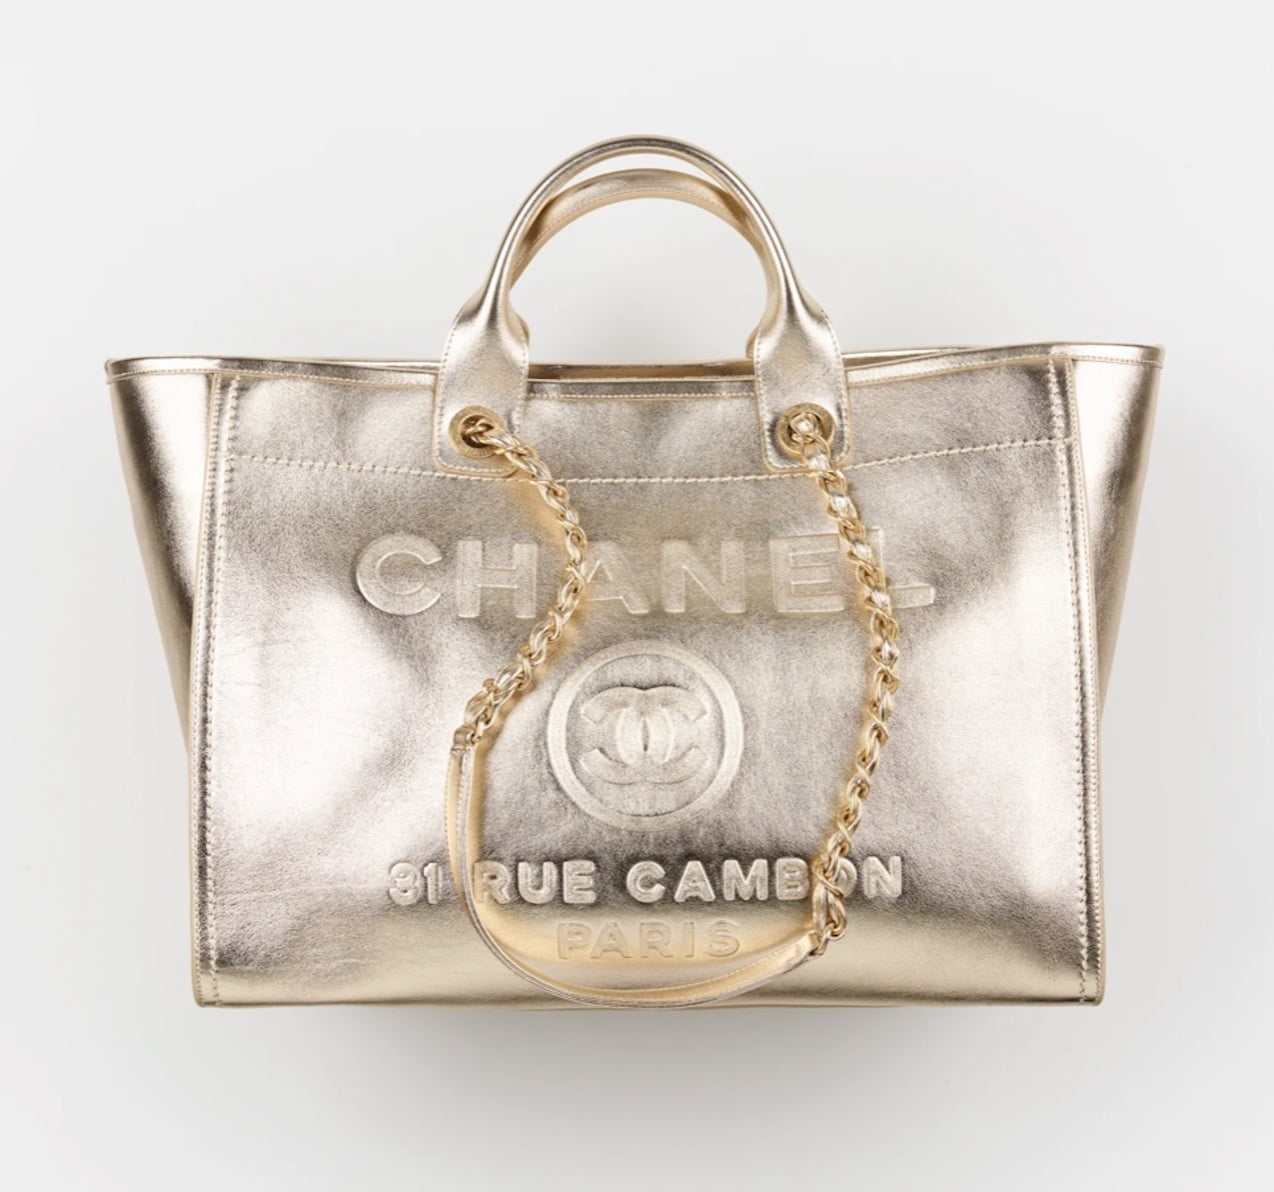 First Look at the Handbags from Chanel Metiérs d'Art 2020/21 - PurseBop